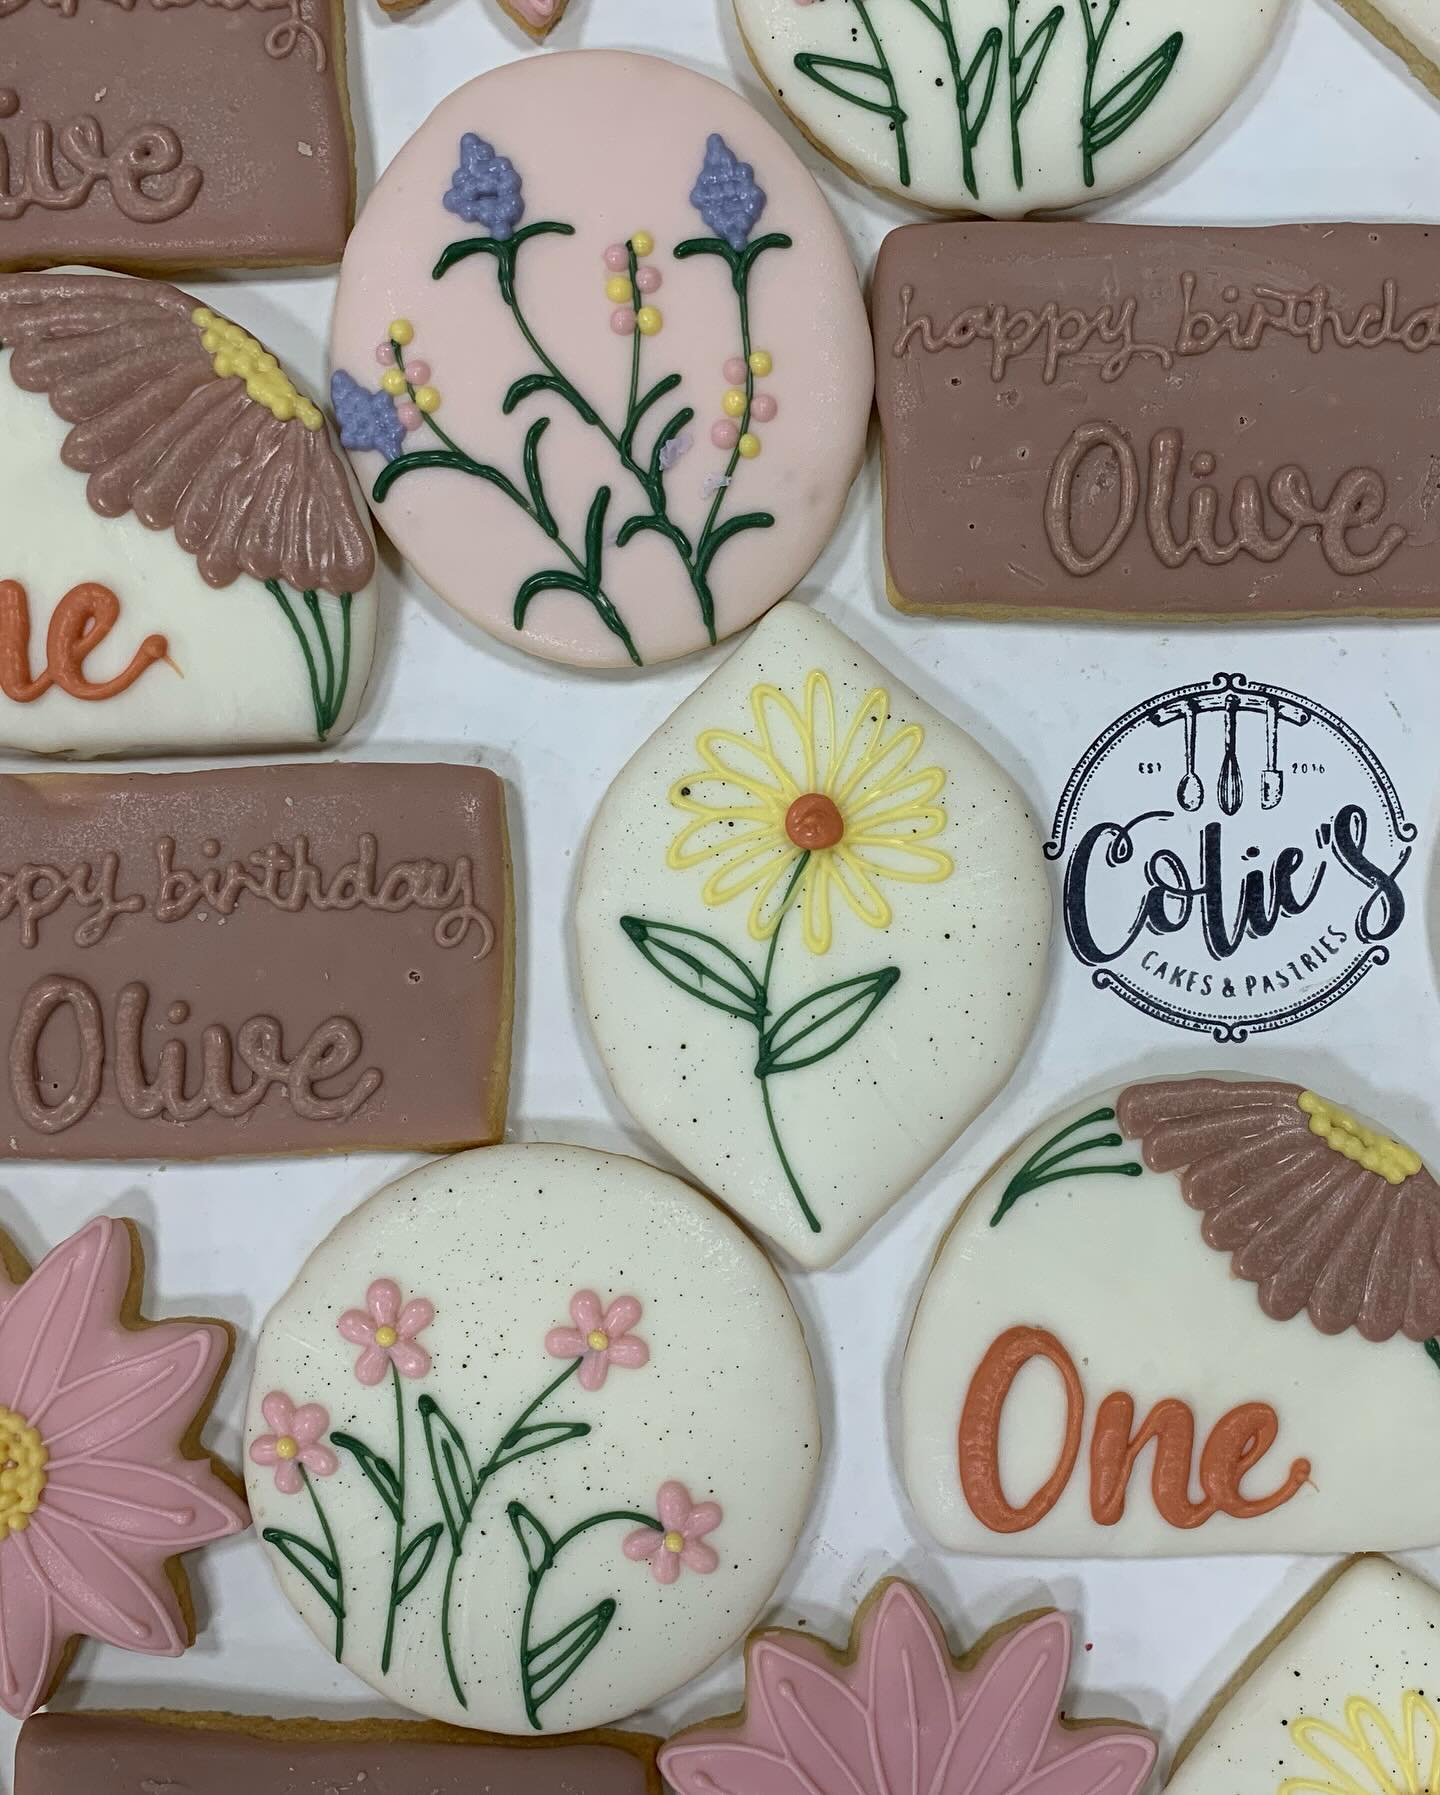 Colie's Cakes & Pastries